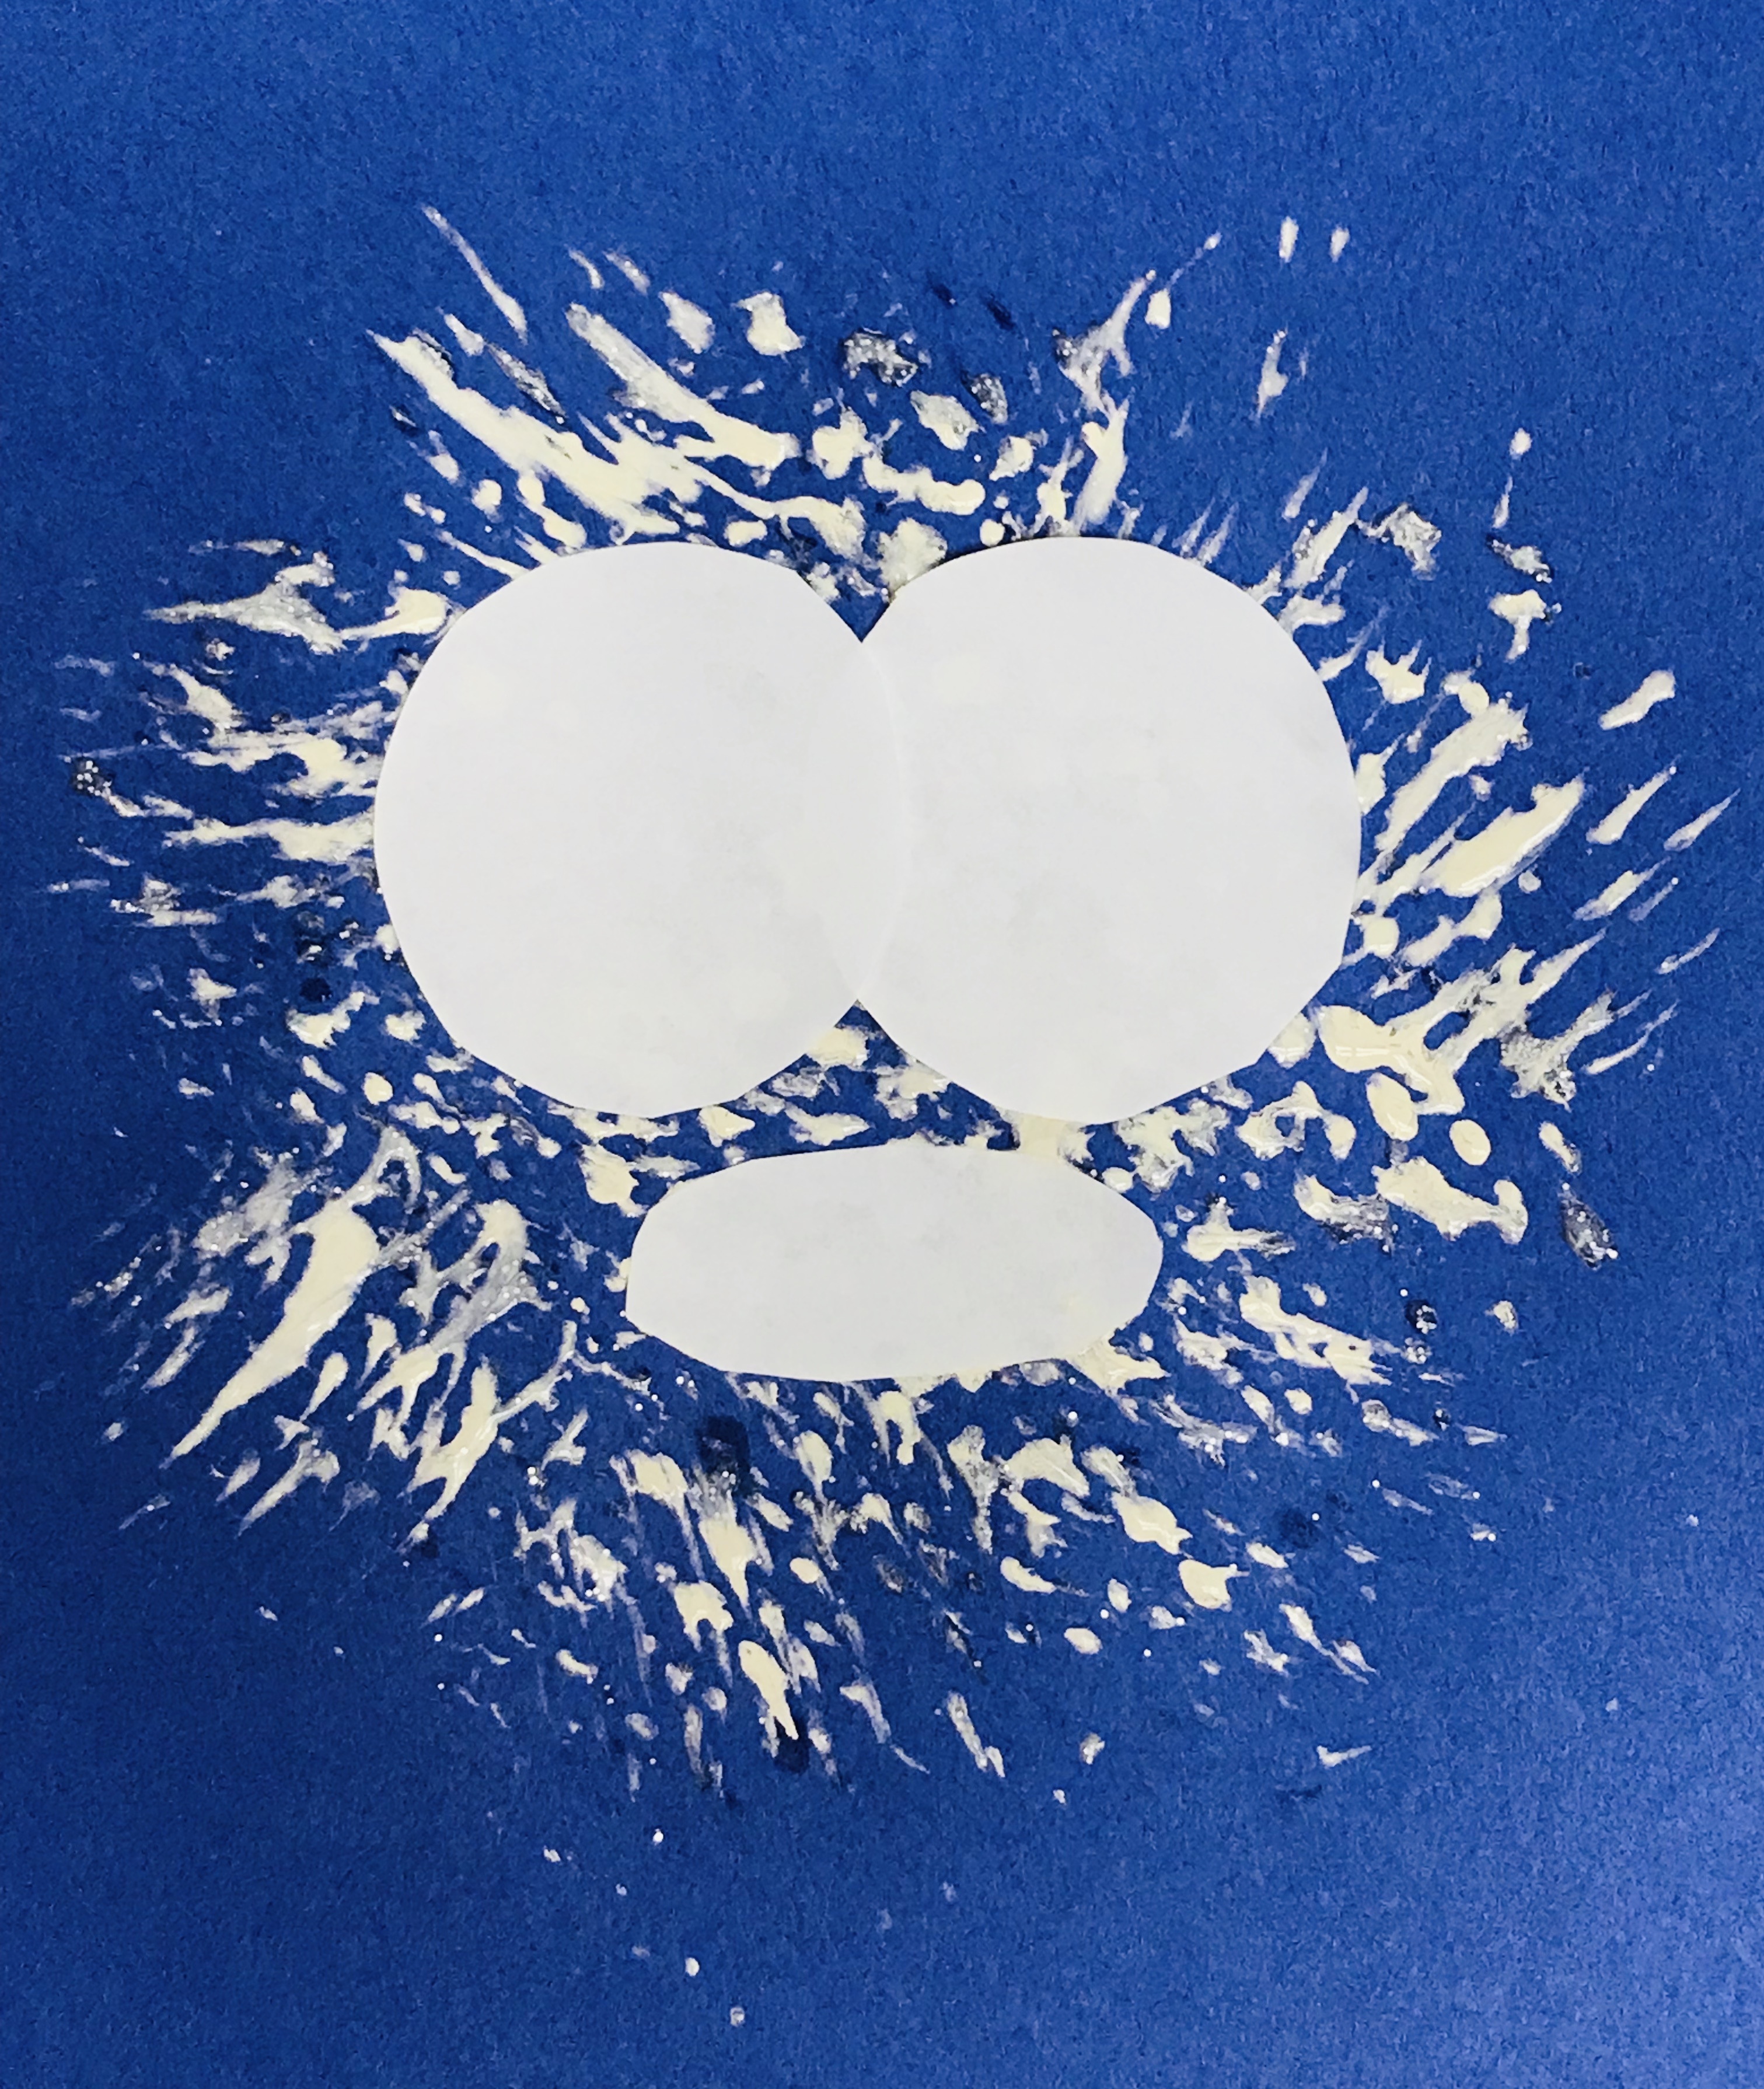 Paper circles on glue splatters